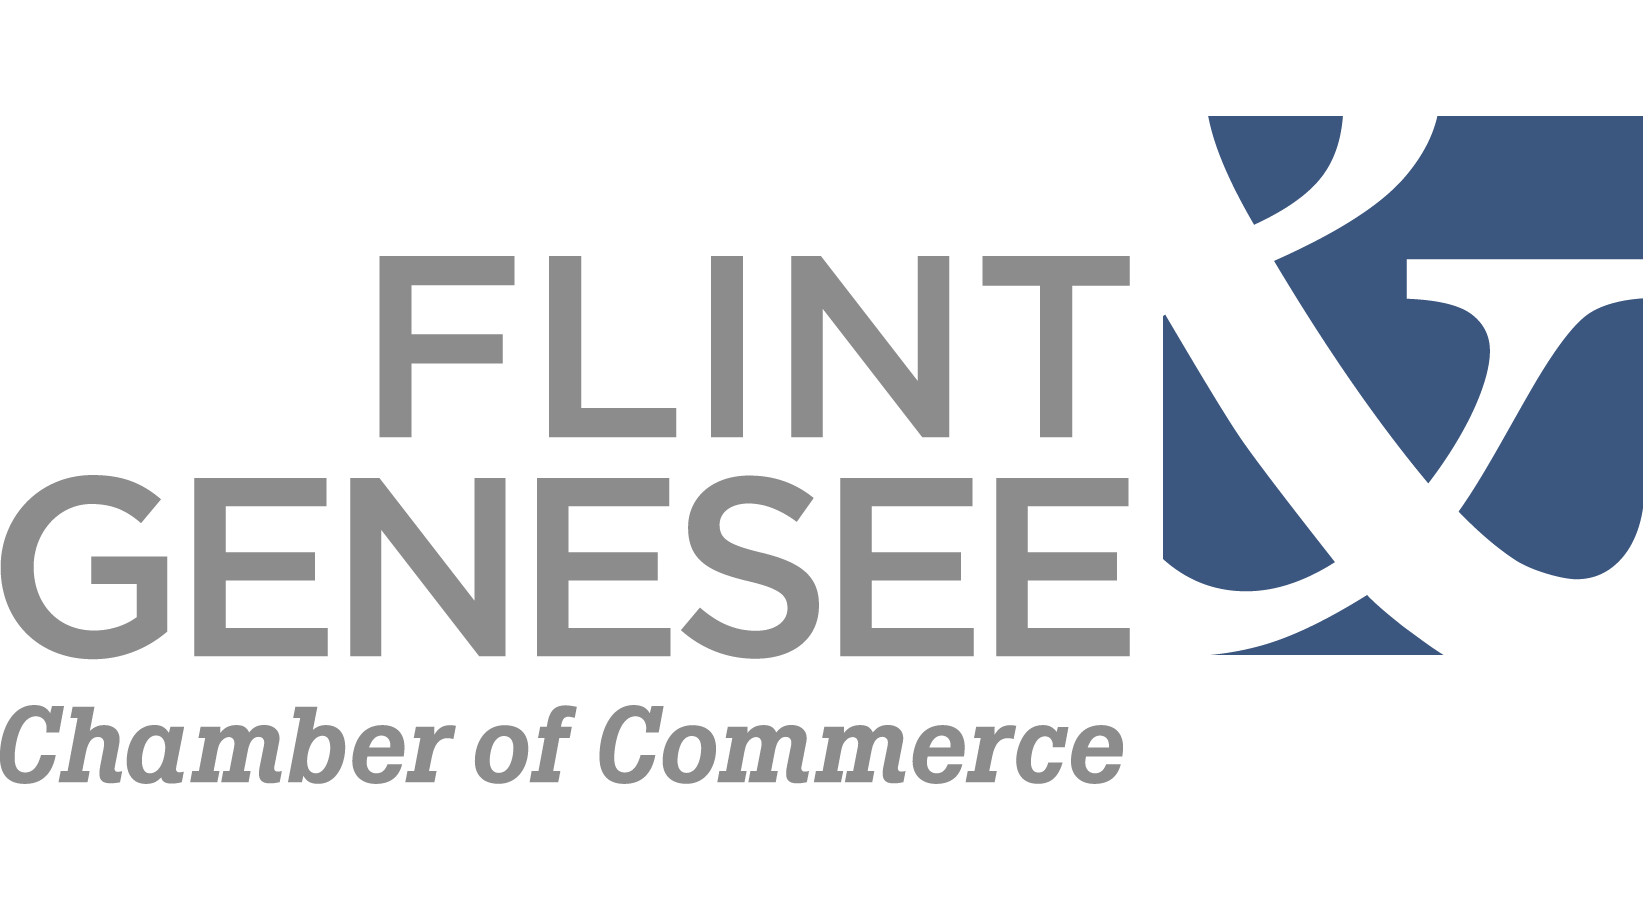 Flint & Genesee Annual Report